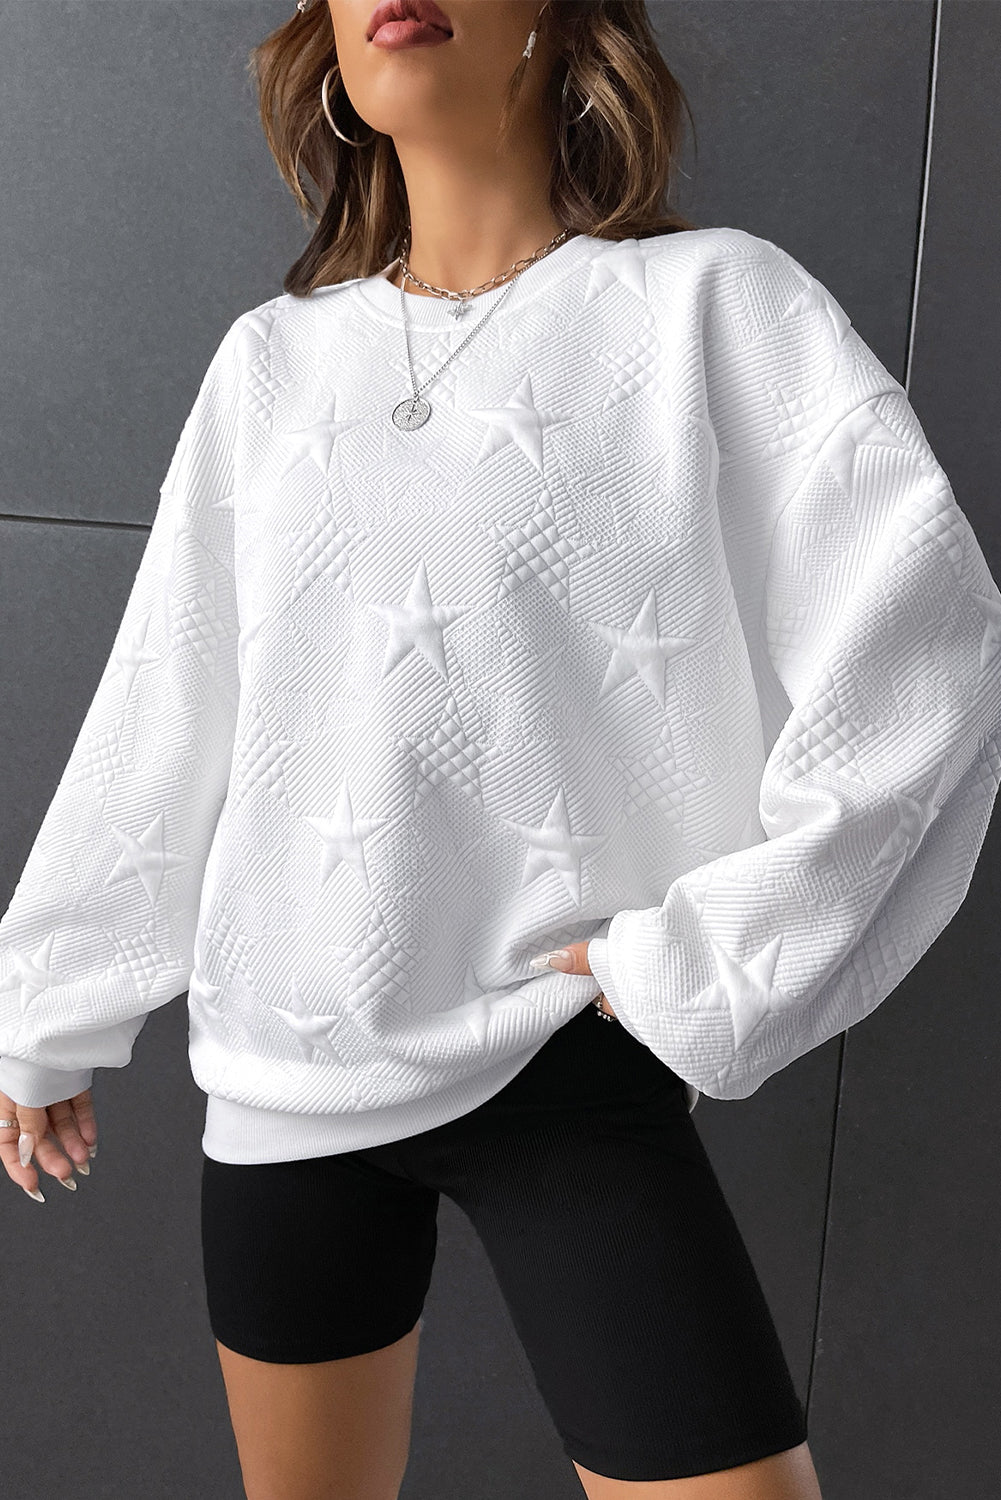 Peach Blossom Star Embossed Textured Drop Shoulder Sweatshirt